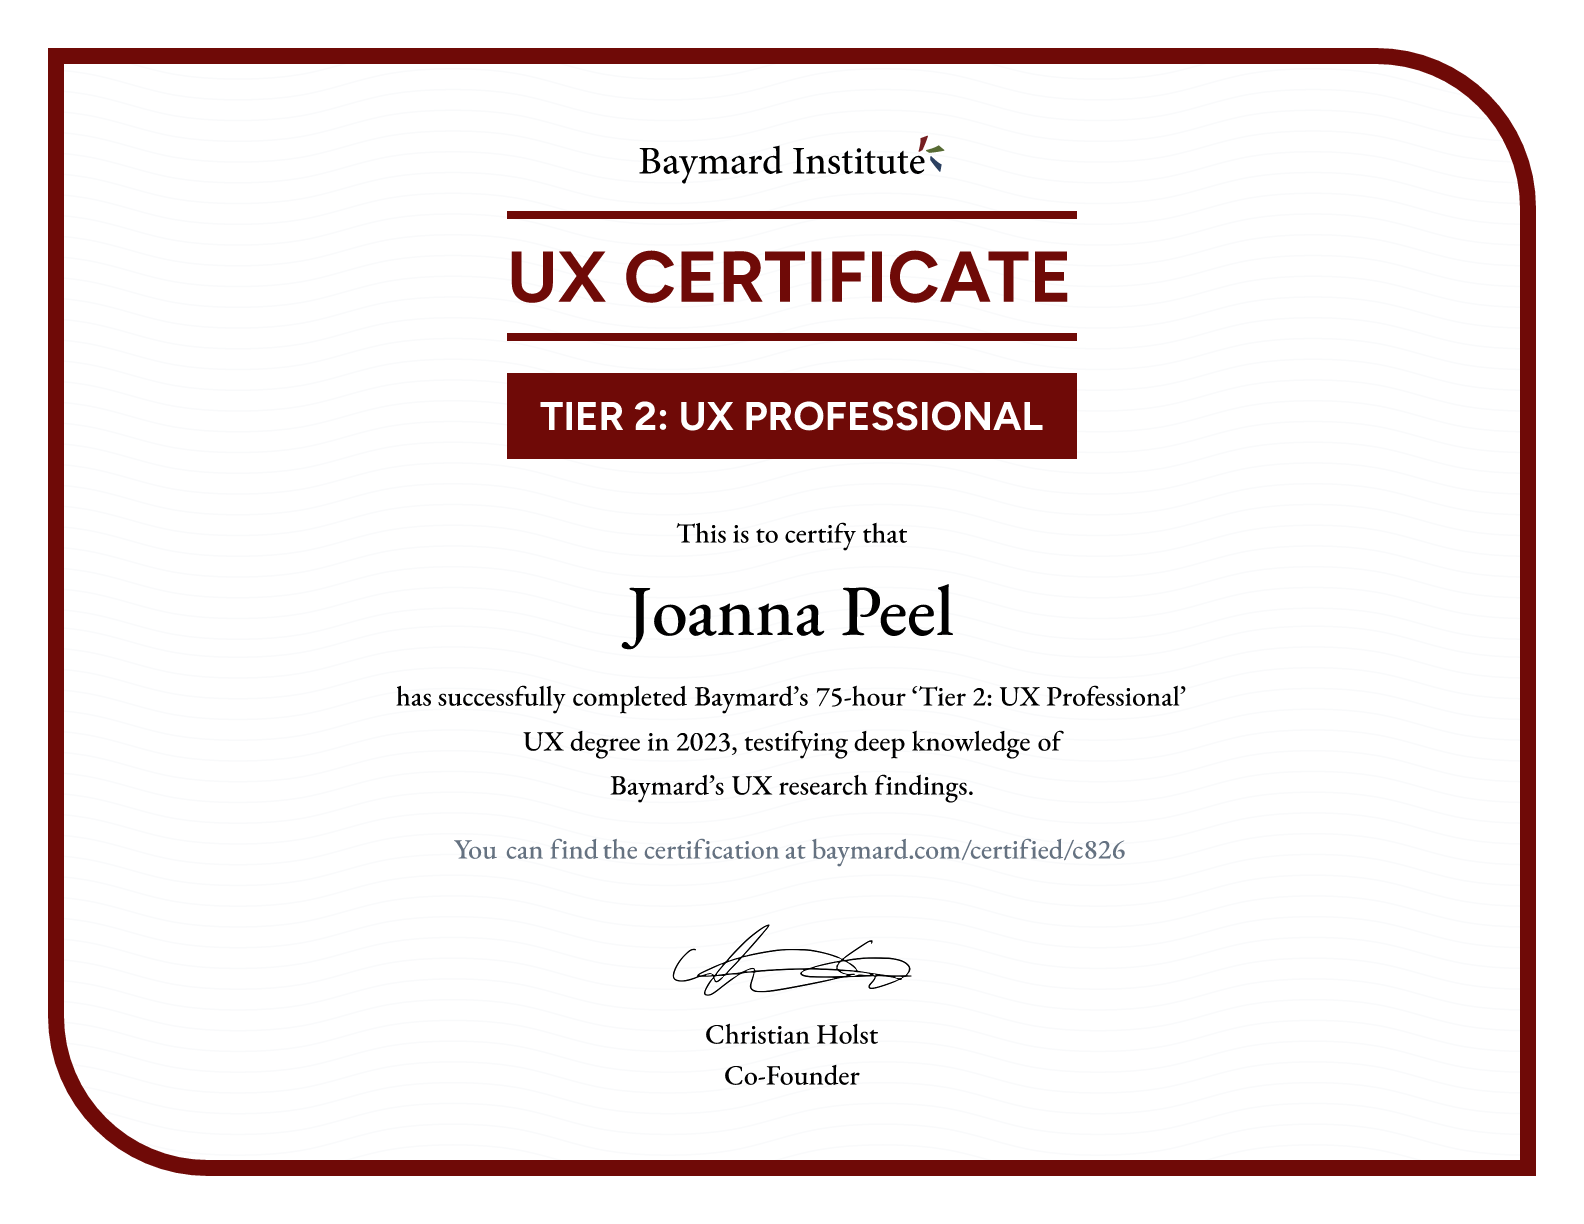 Joanna Peel’s certificate